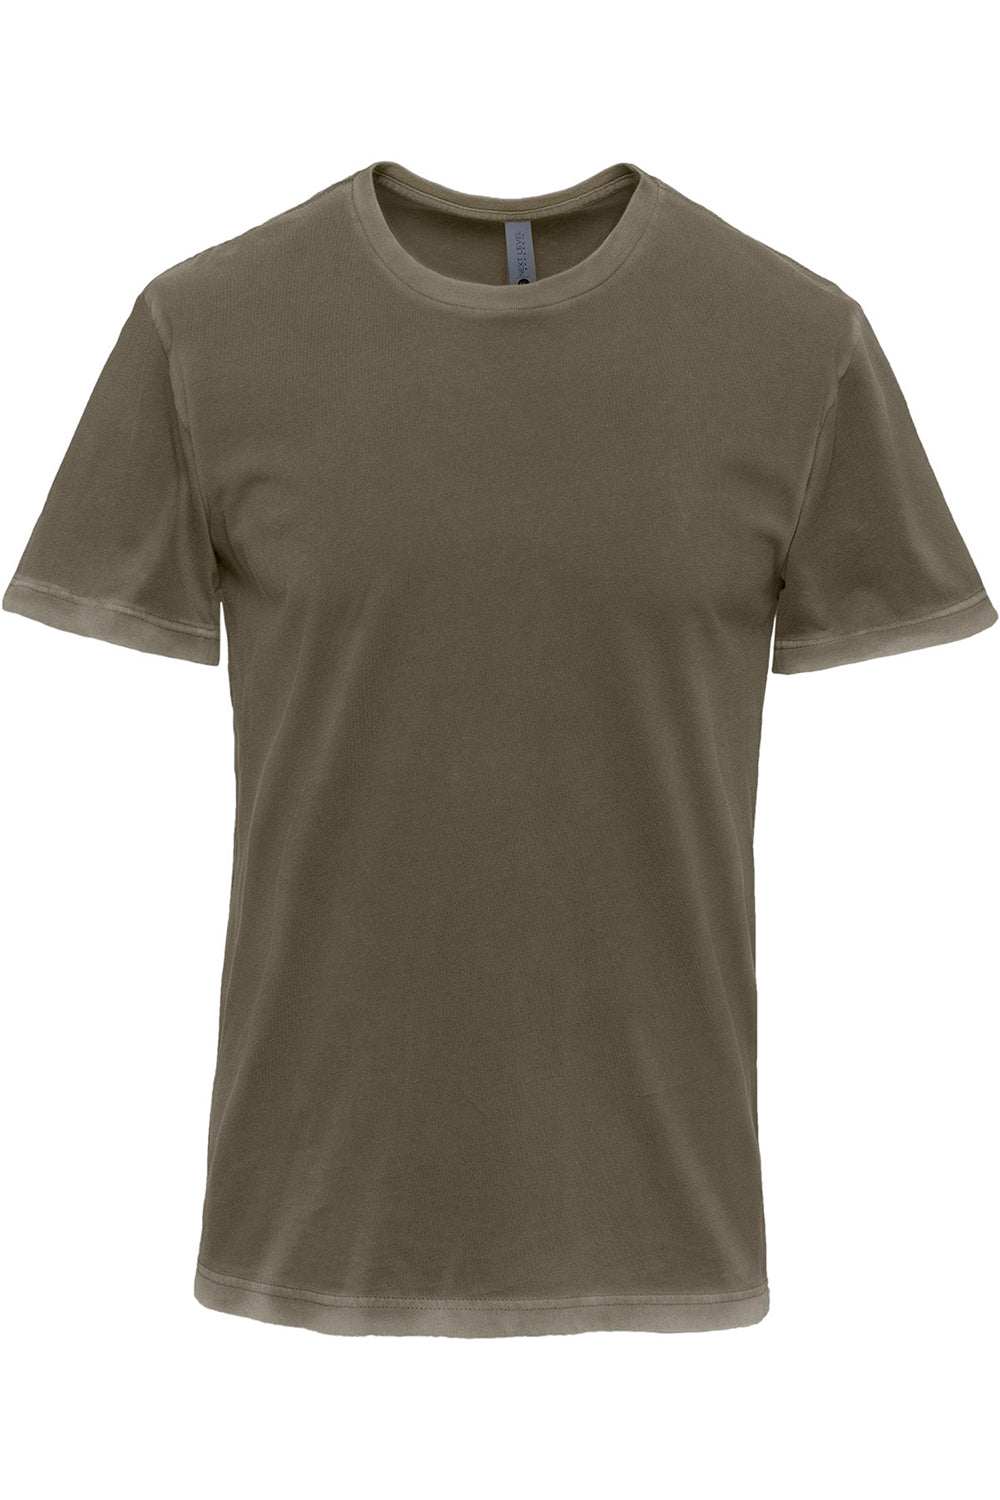 Next Level 3600SW Mens Soft Wash Short Sleeve Crewneck T-Shirt Military Green Flat Front